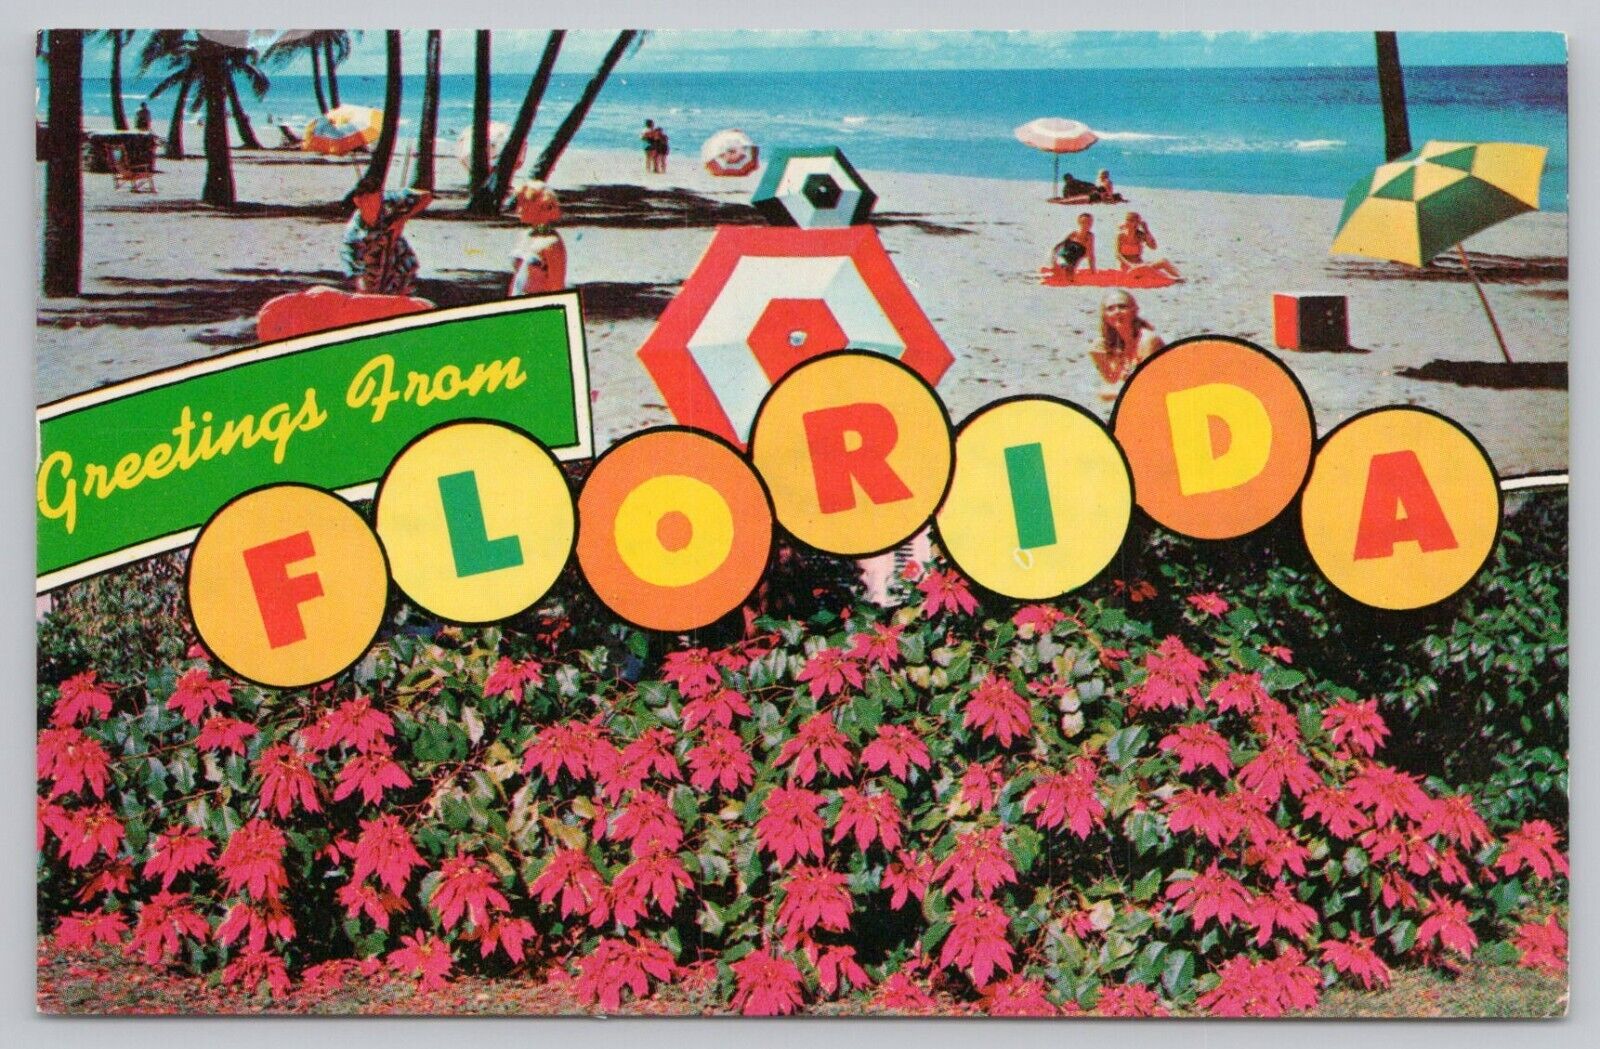 Postcard Greetings from Florida, beach scene